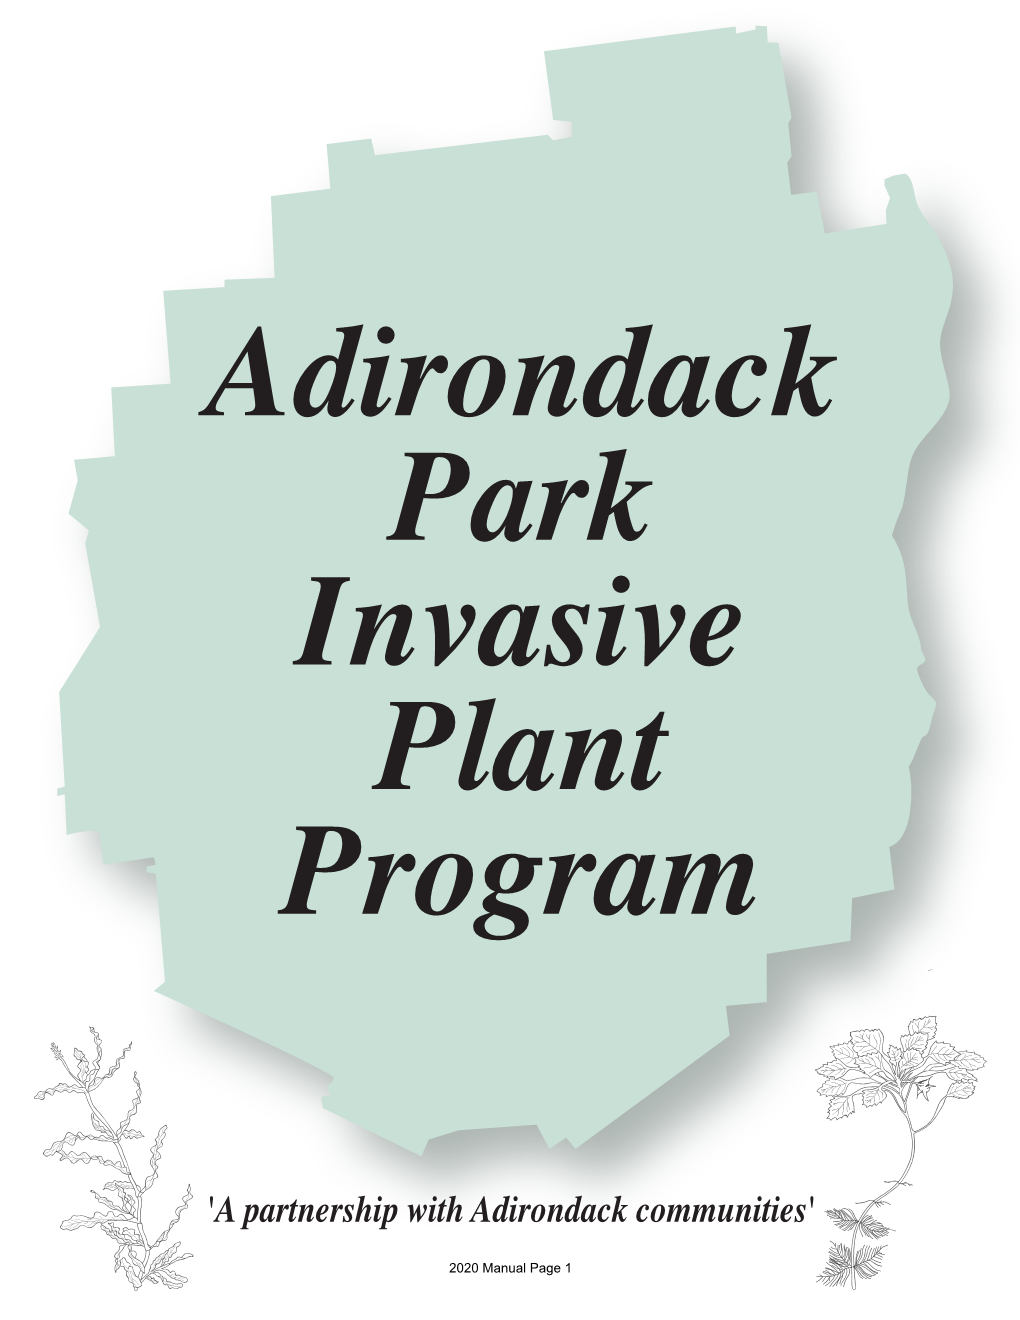 'A Partnership with Adirondack Communities'